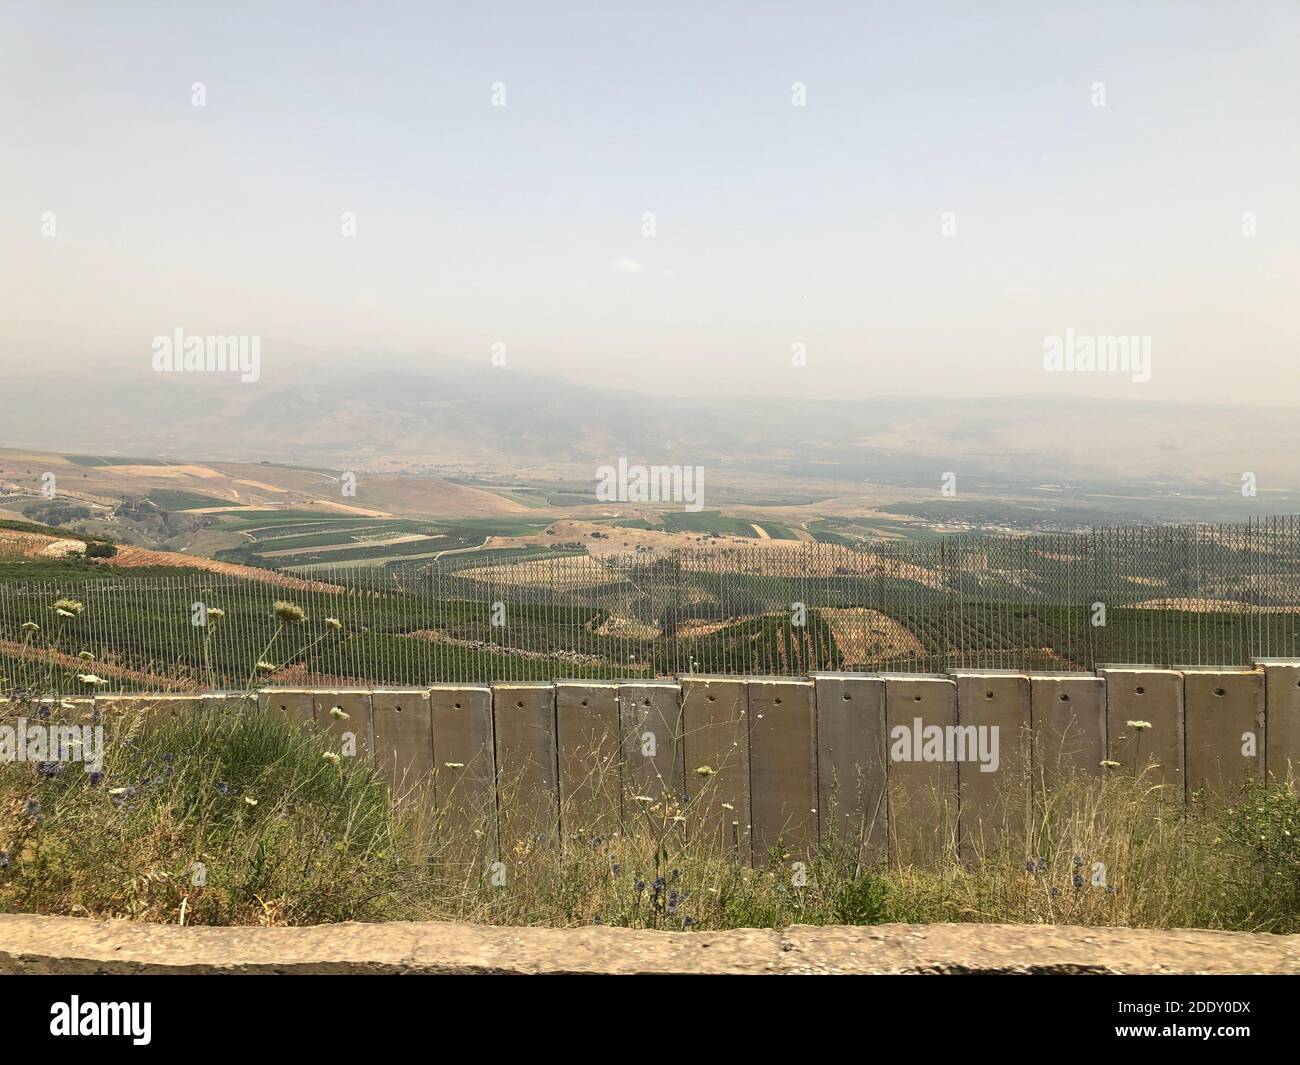 South of Lebanon: Lebanon Palestine Borders Israeli Concrete Wall Divider Stock Photo